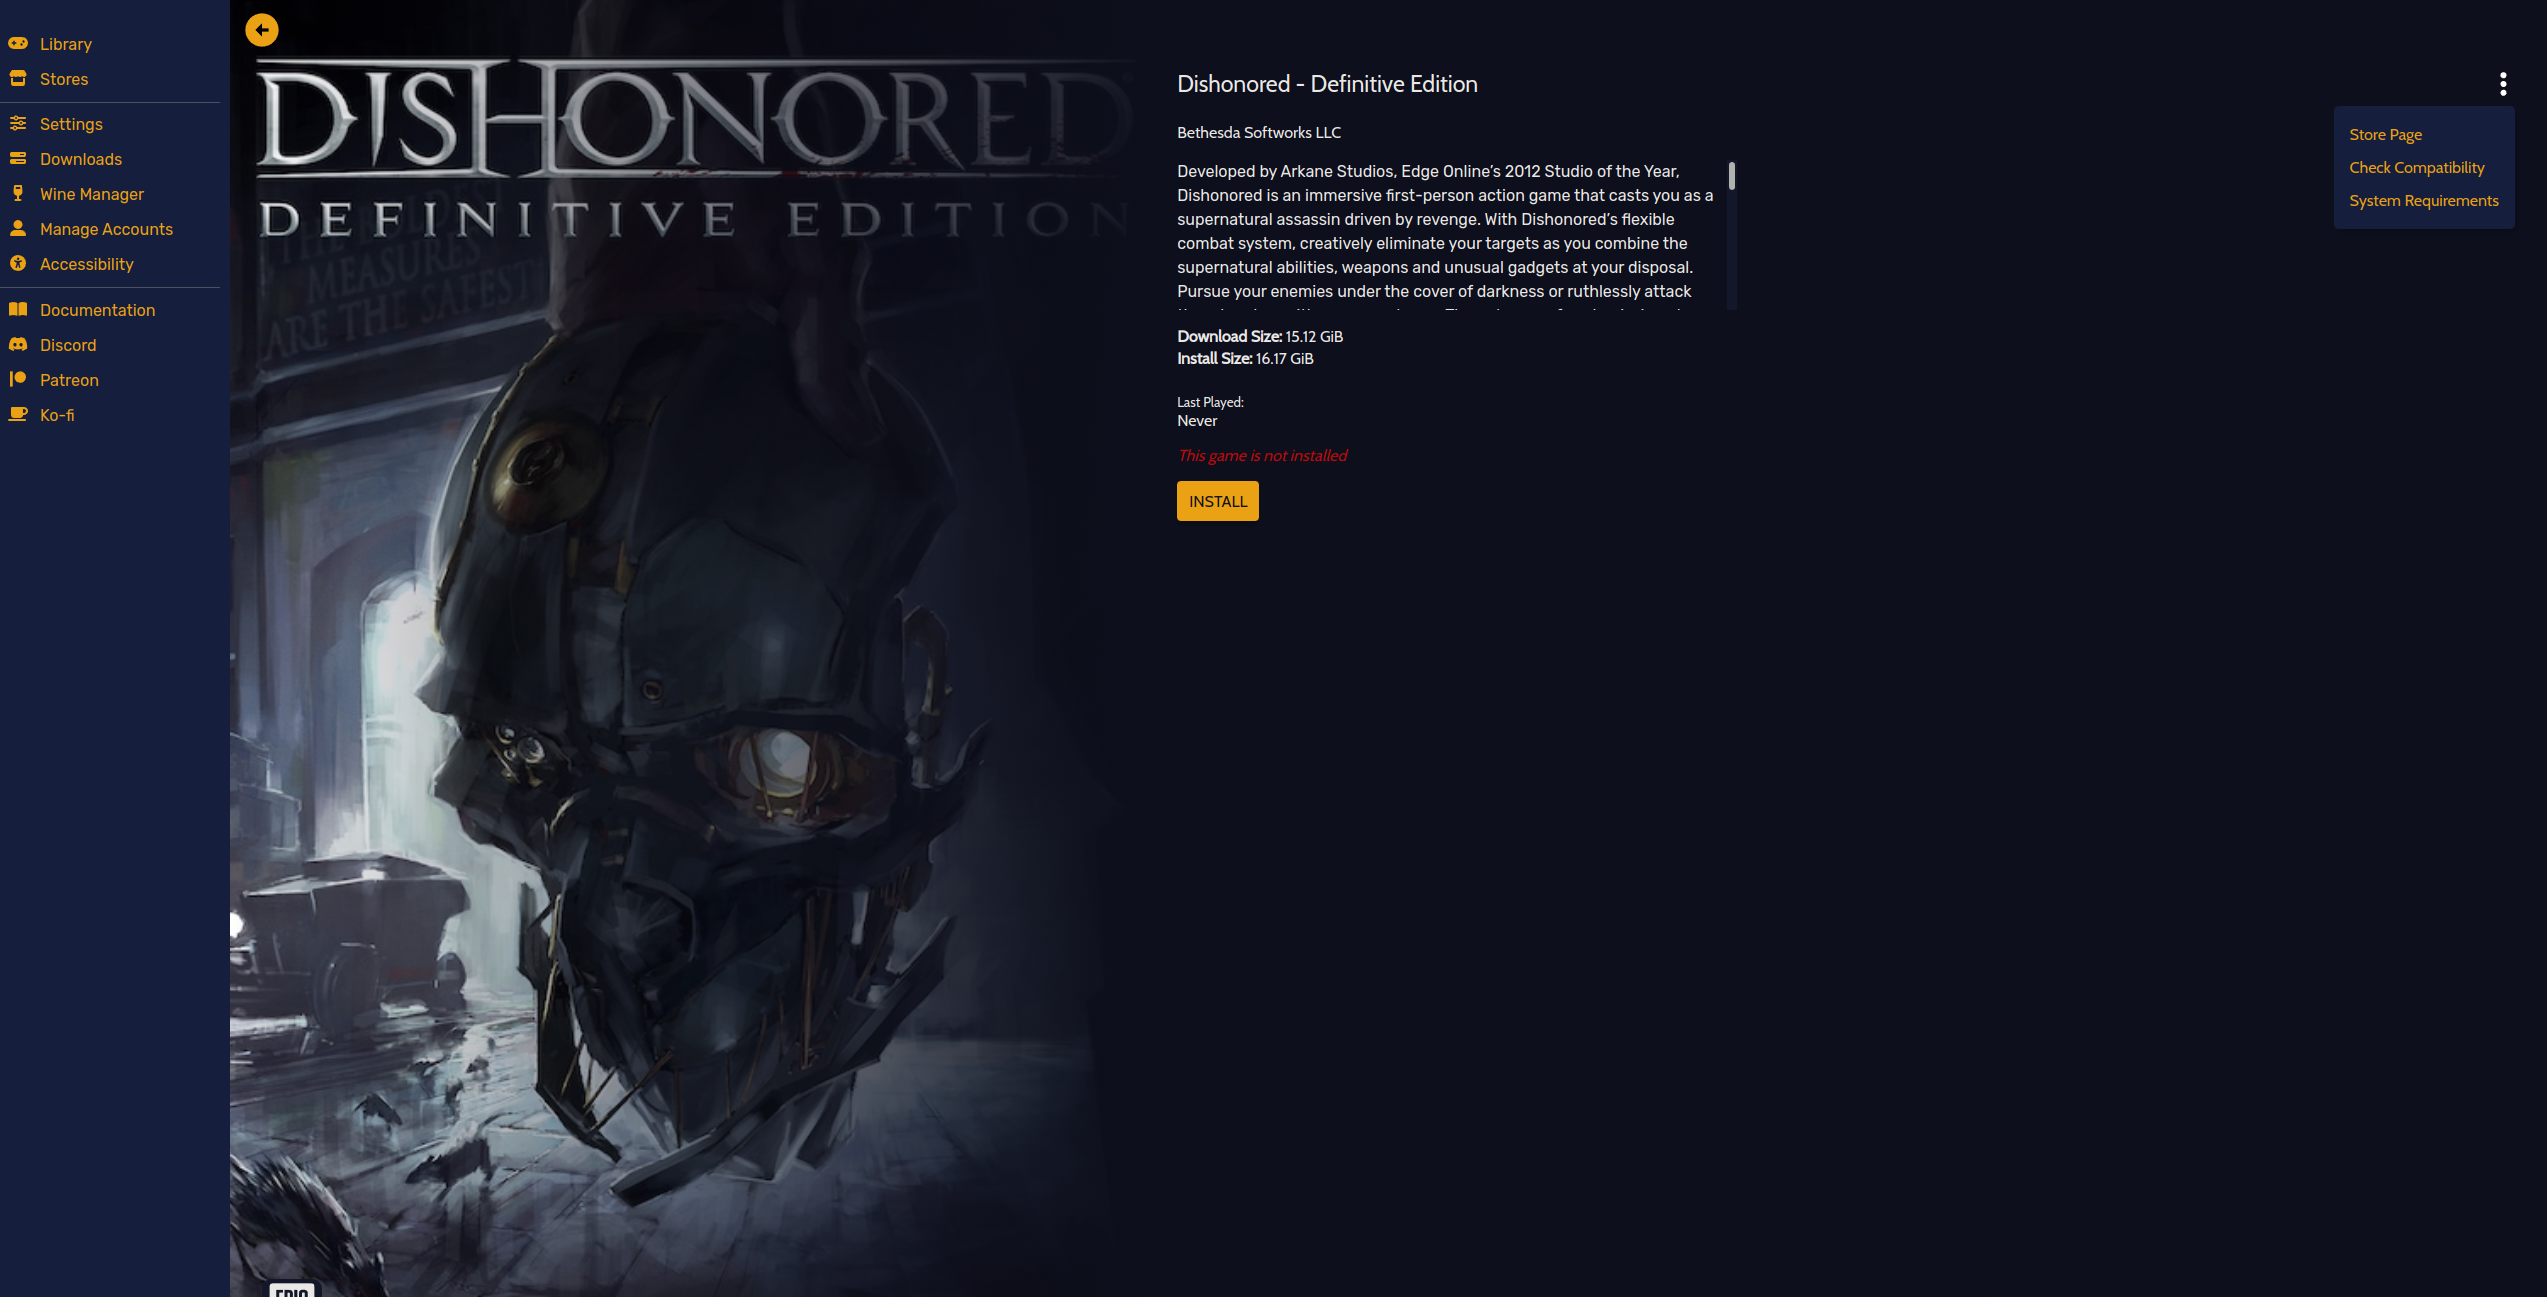 Steam Workshop::Dishonored: Supernatural Abilities